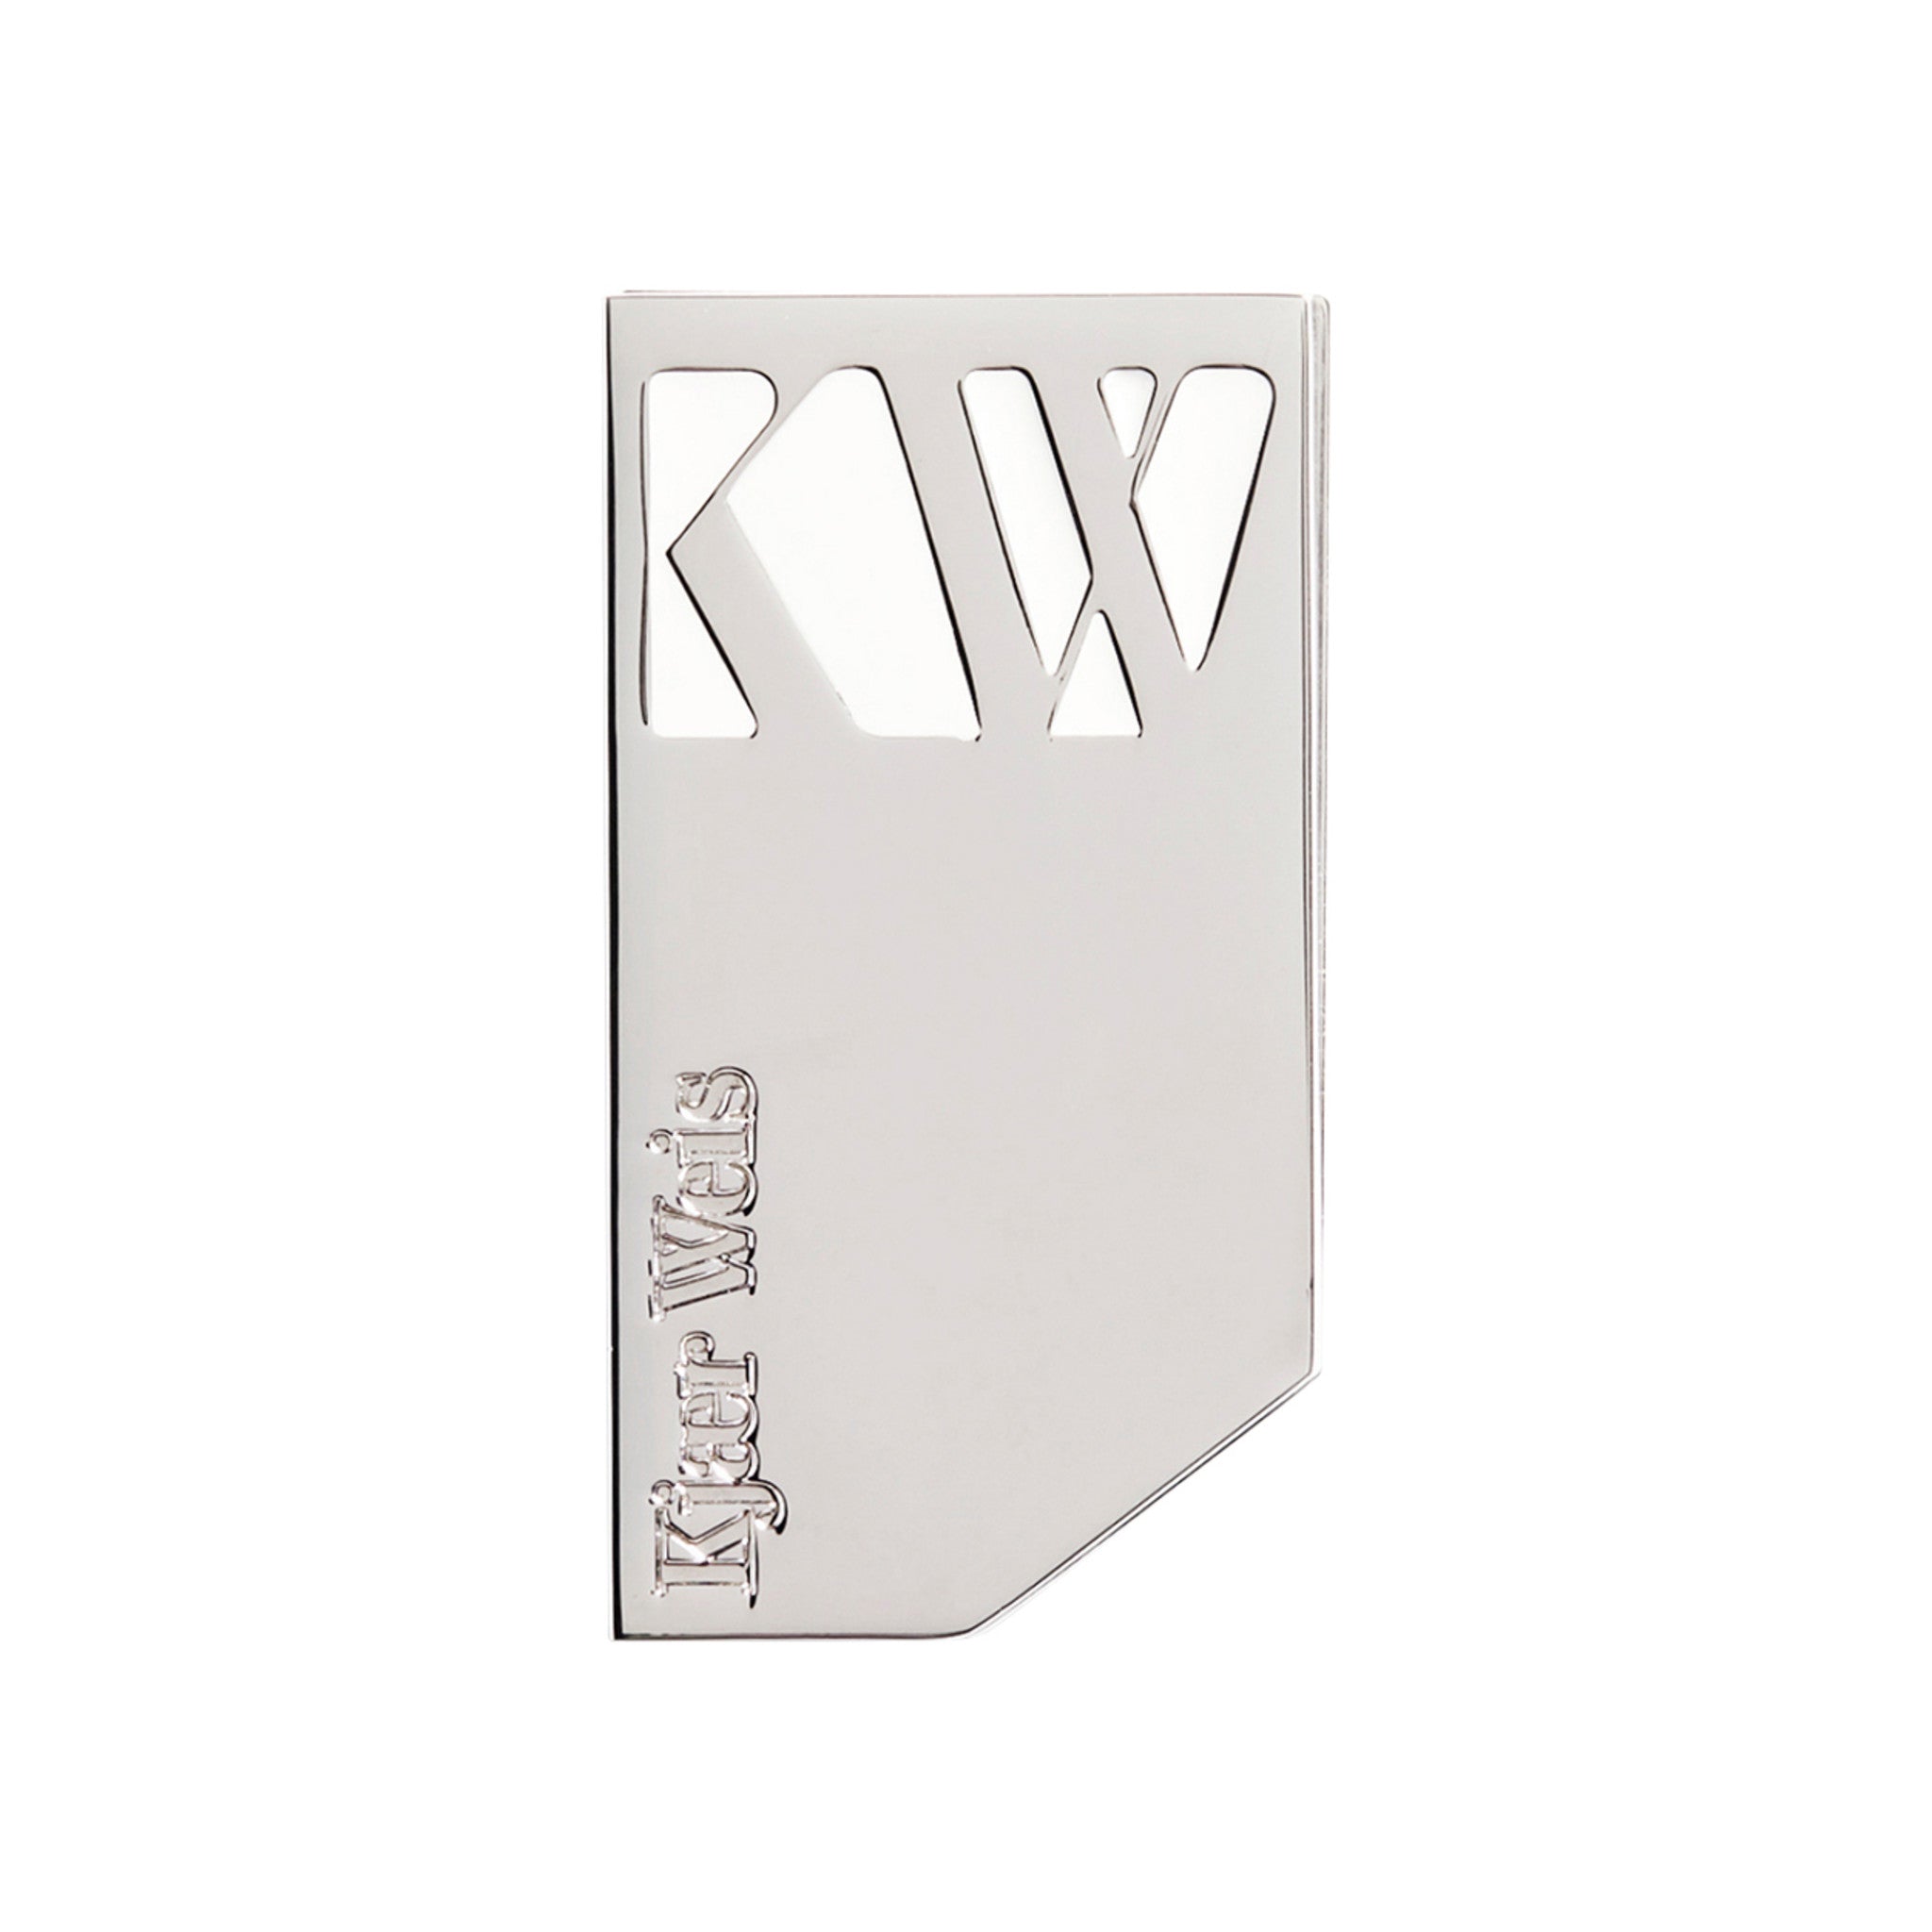 Kjaer Weis Iconic Edition Lip Tint Case main image.